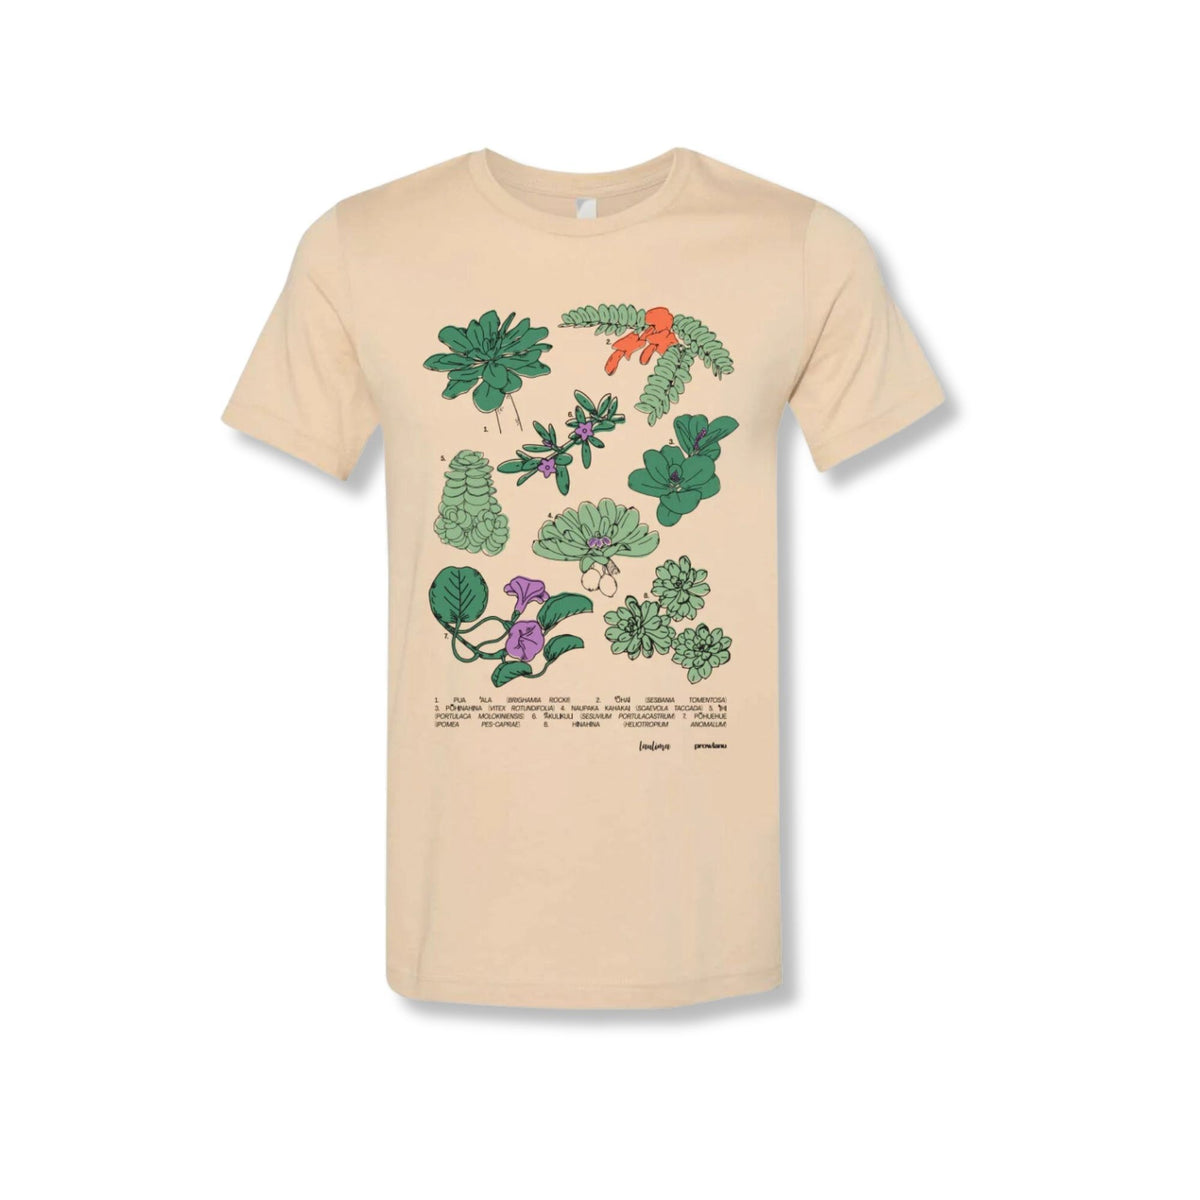 Pop-Up Mākeke - Laulima Hawai&#39;i - Makai Unisex Short Sleeve T-Shirt - Front View